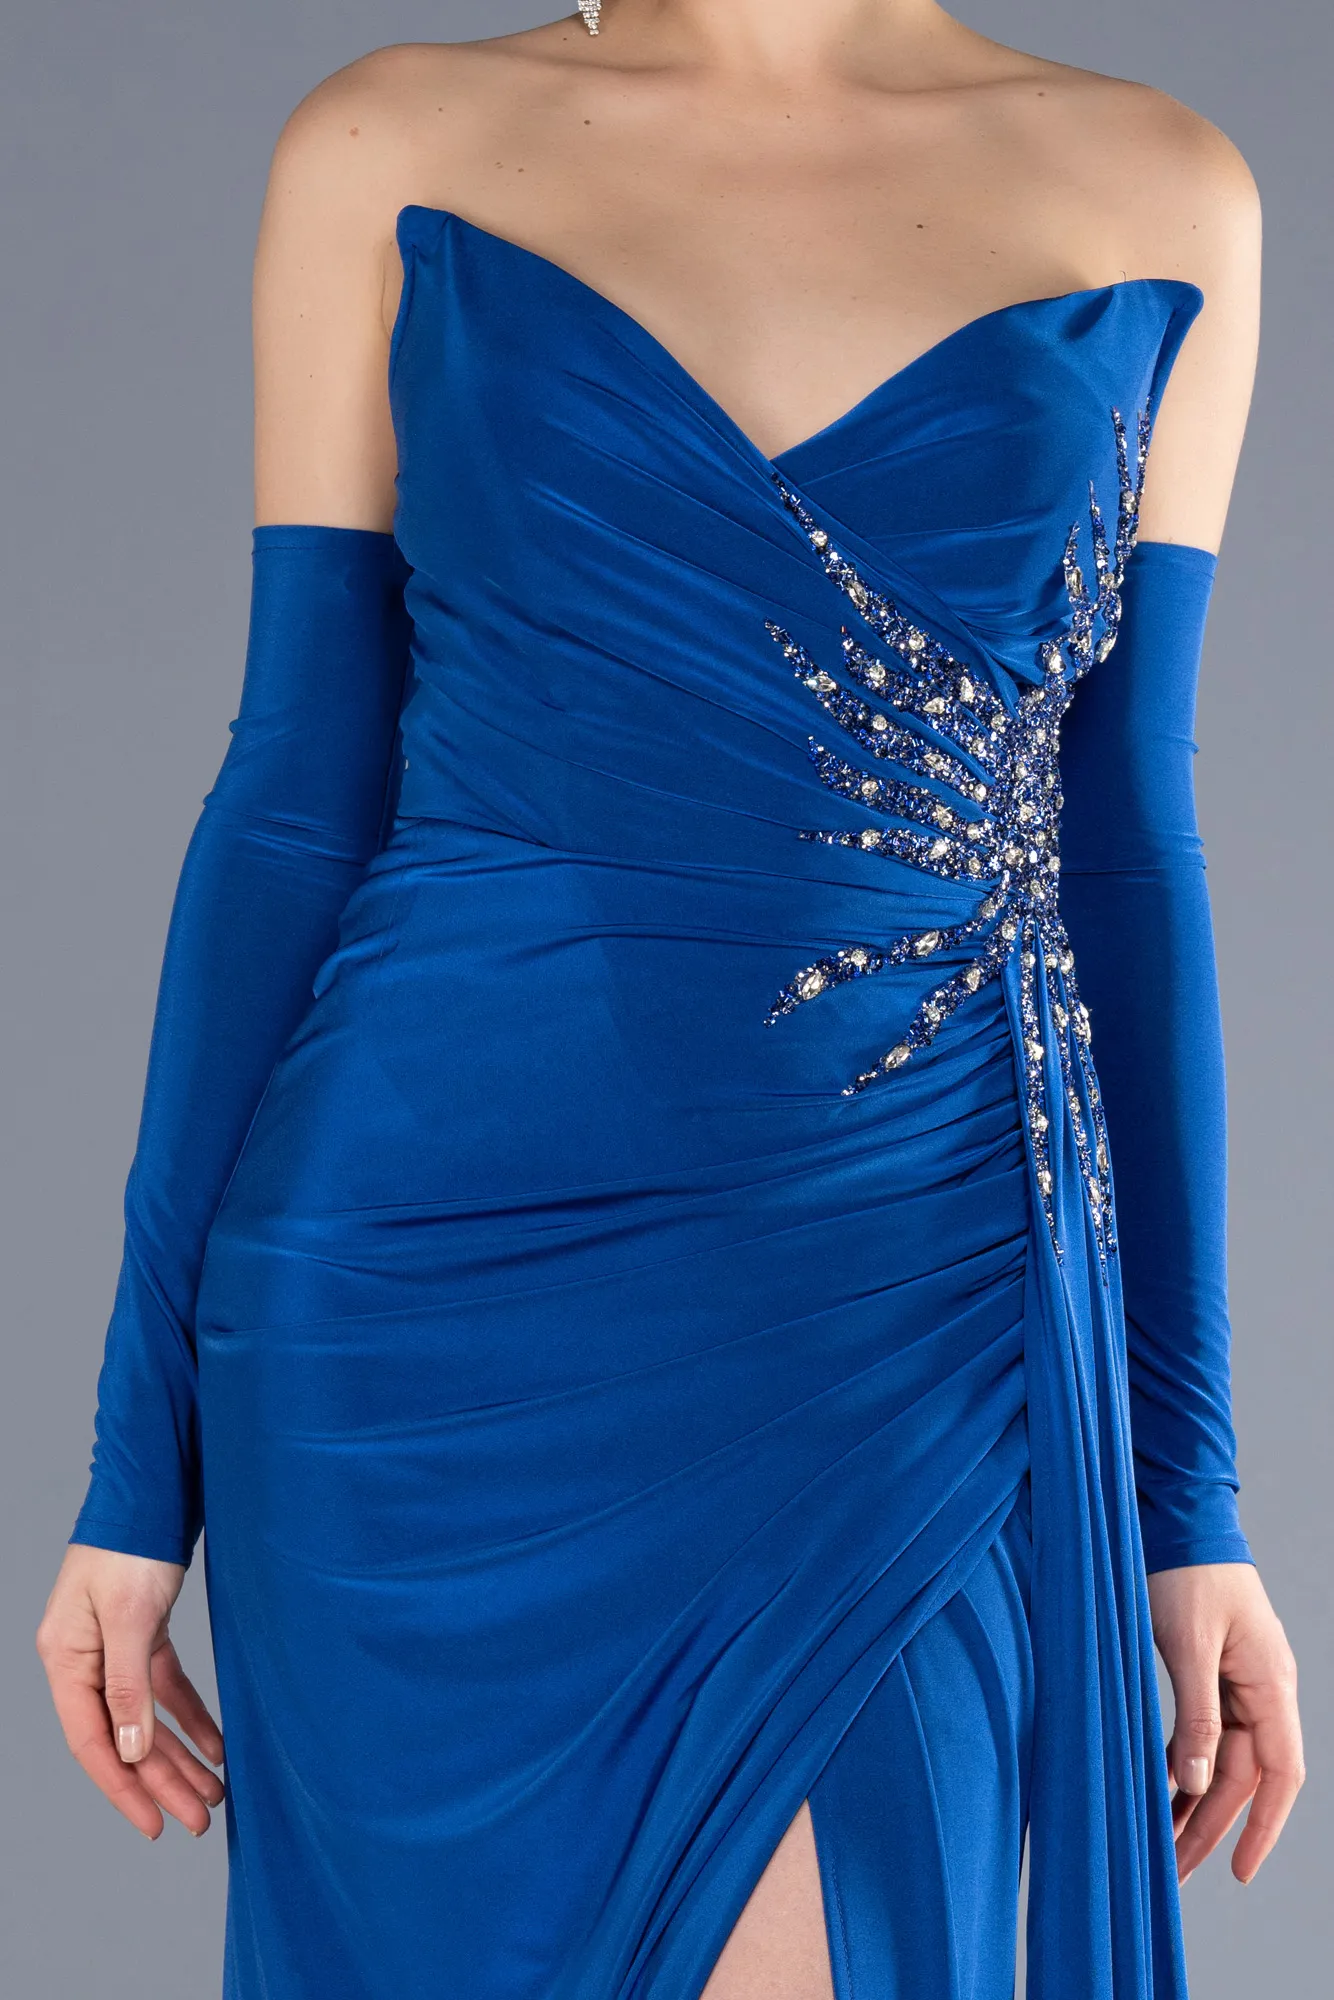 Sax Blue-Long Evening Dress ABU3679